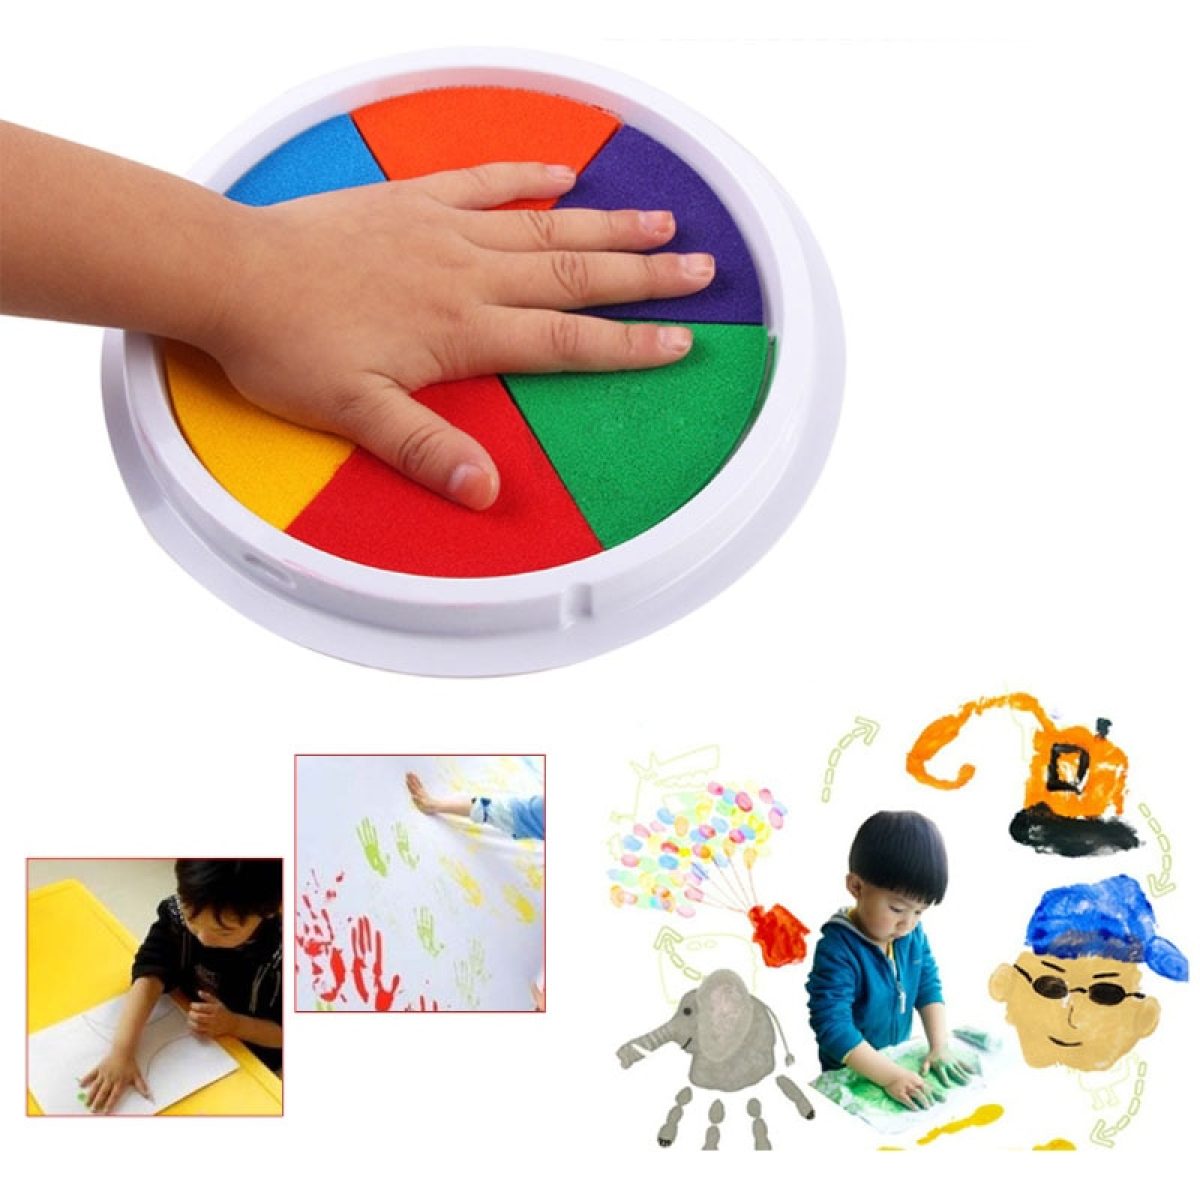 https://kidlovestoys.com/wp-content/uploads/2019/07/DIY-Finger-Painting-Toys-6-Color-Kids-Funny-Graffiti-Art-Craft-Inkpad-Stamps-Baby-Learning-Education-1200x1200.jpg